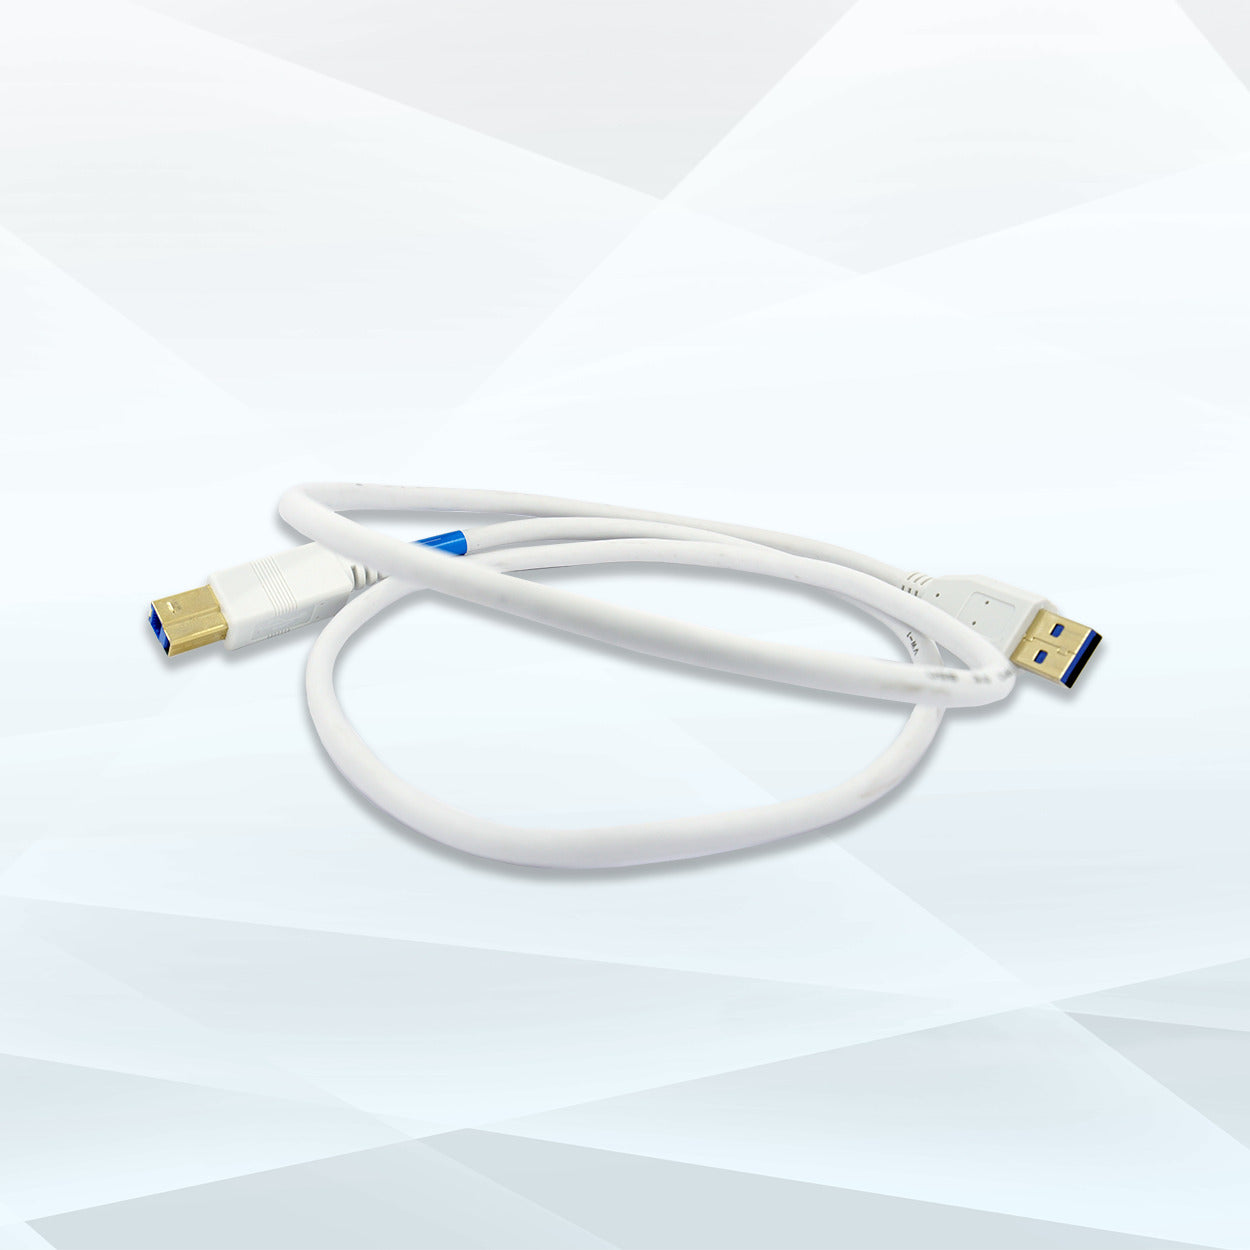 Medit USB 3.0 Cable